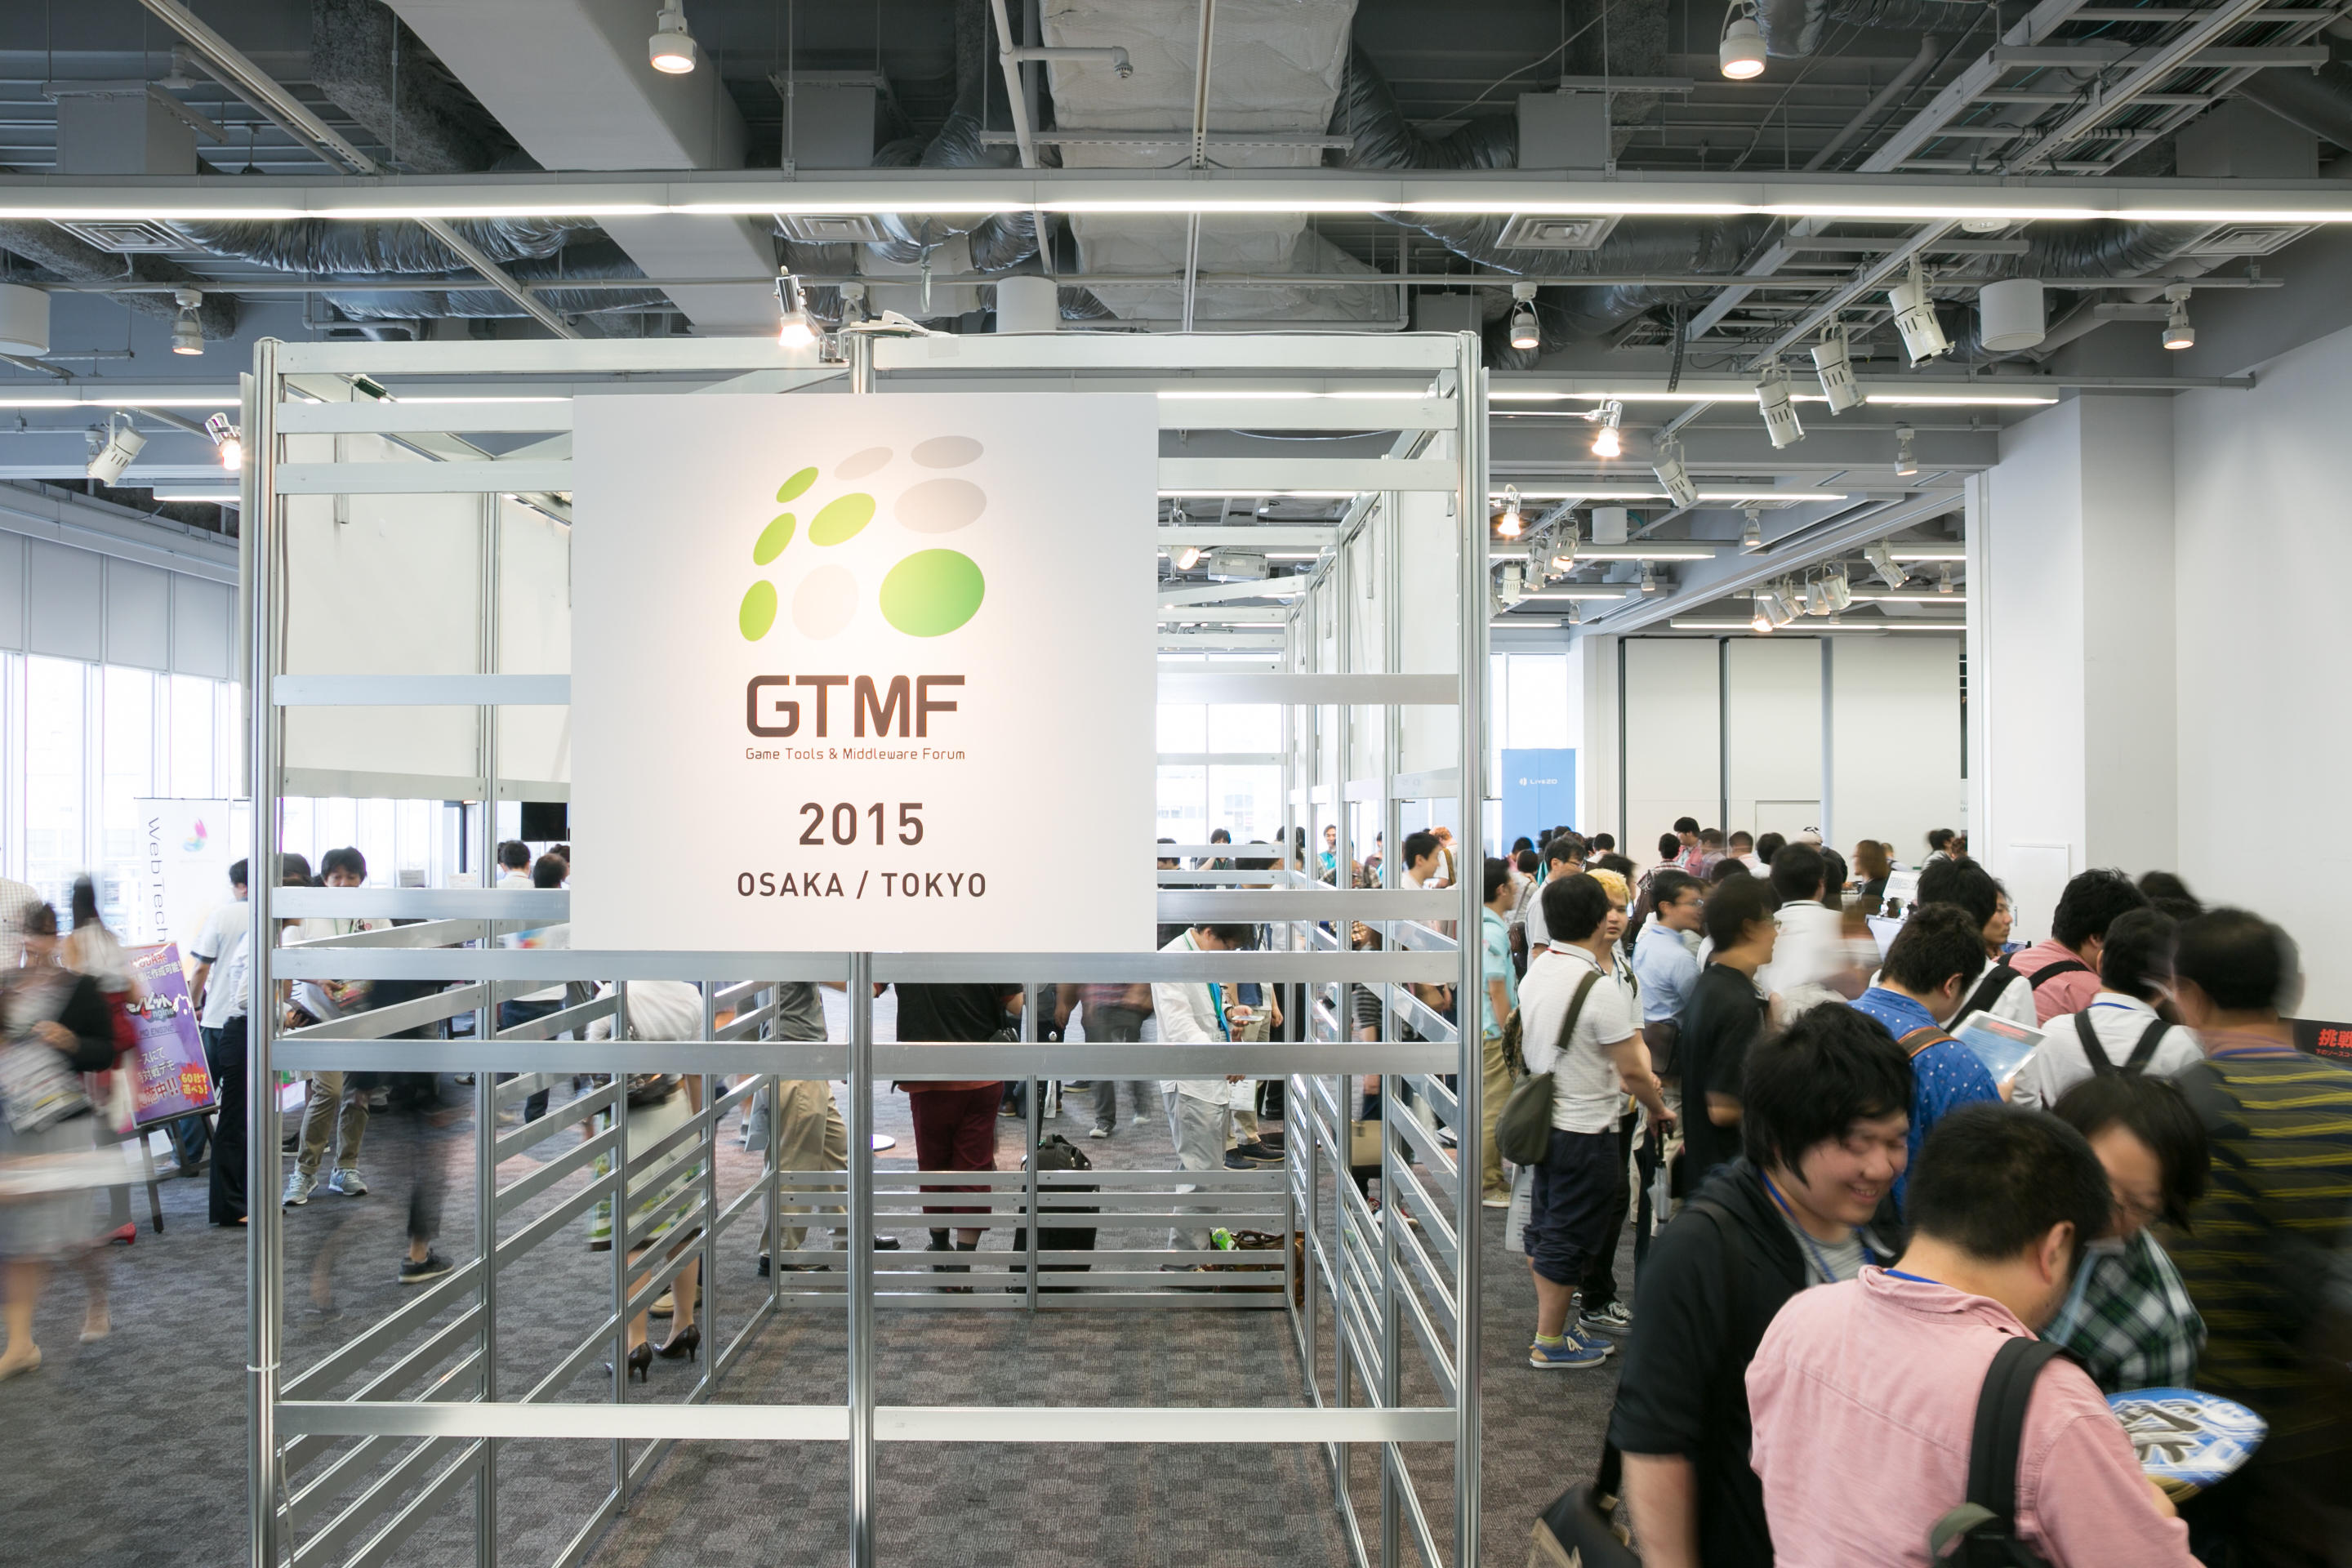 Game Tools & Middleware Forum 2015（GTMF2015）